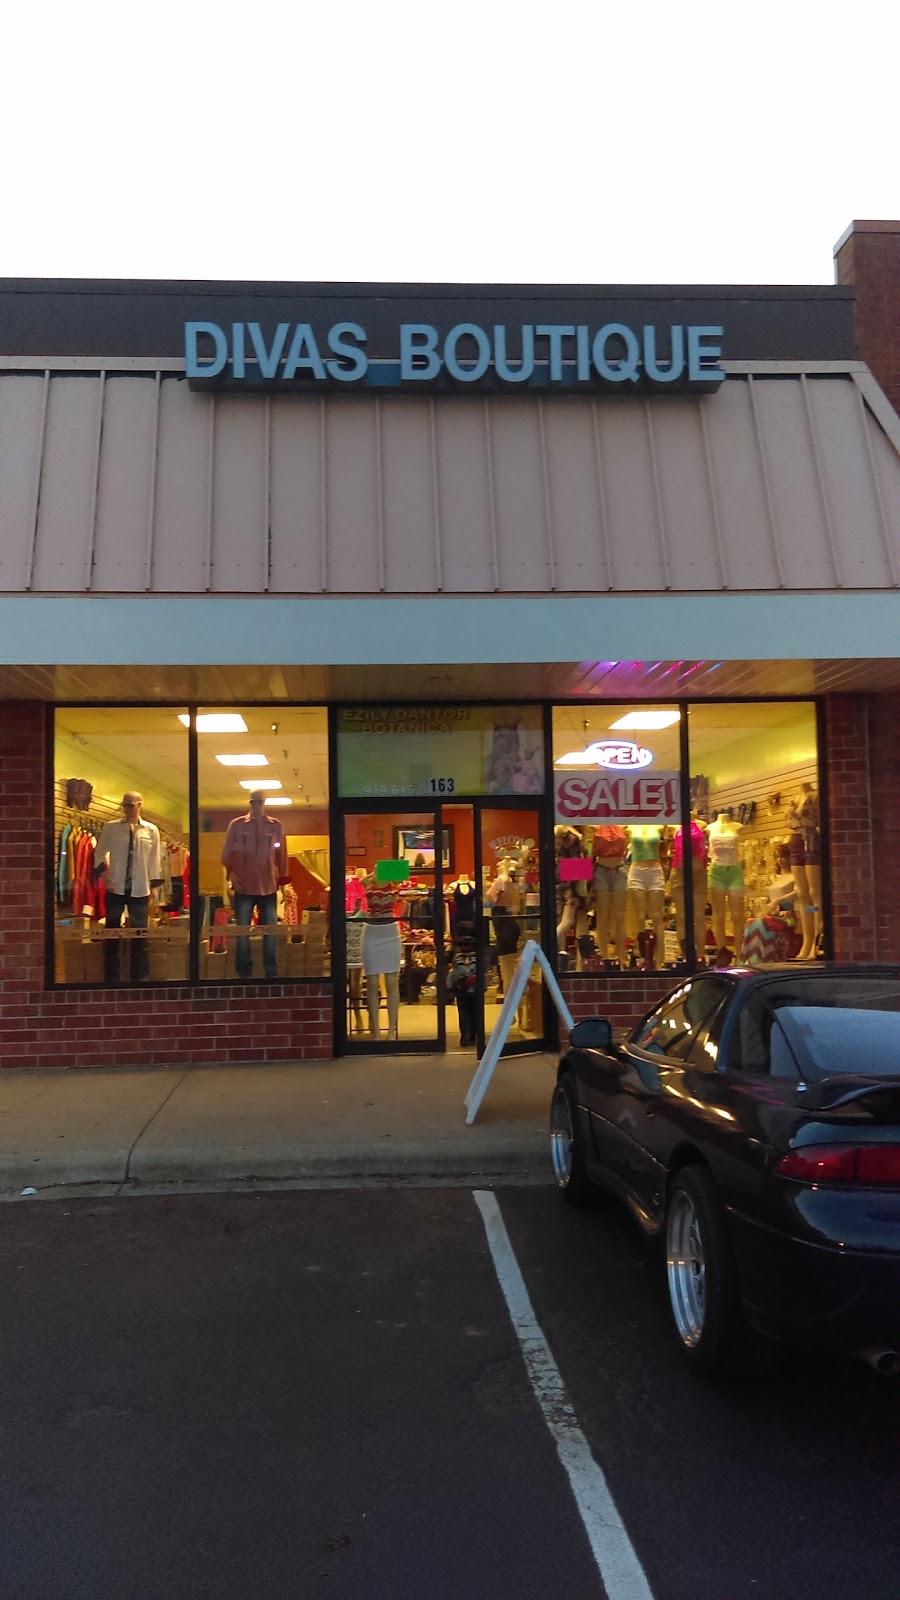 Divas boutique | 421 Chapanoke Rd Suite 163, Raleigh, NC 27603 | Phone: (919) 400-0738